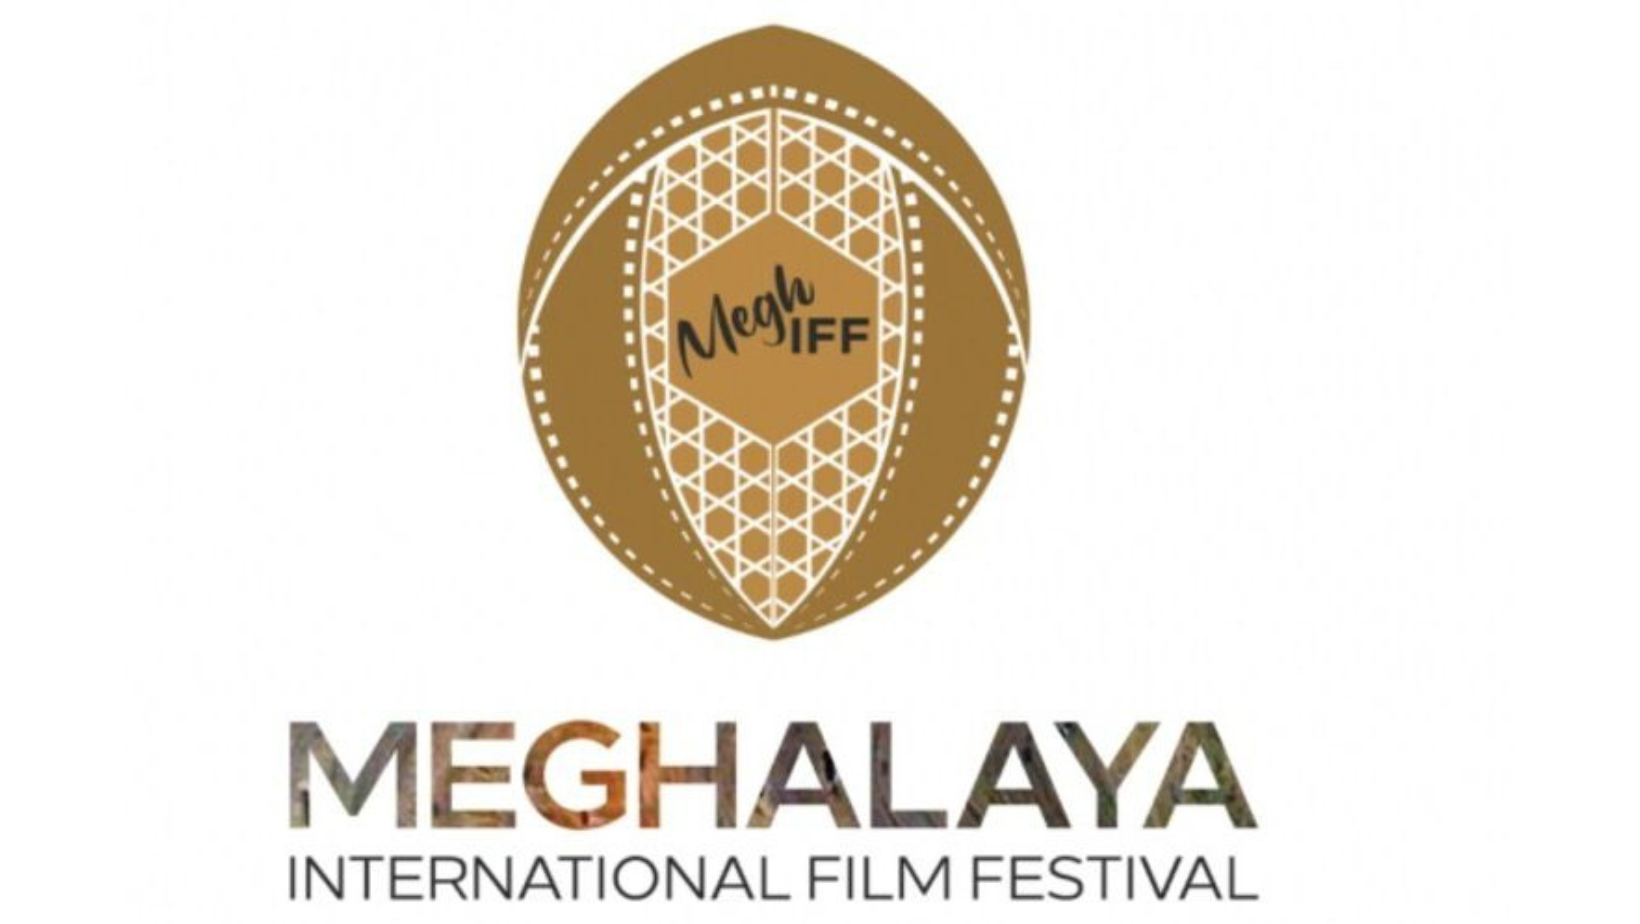 Meghalaya International Film Festival begins in Shillong